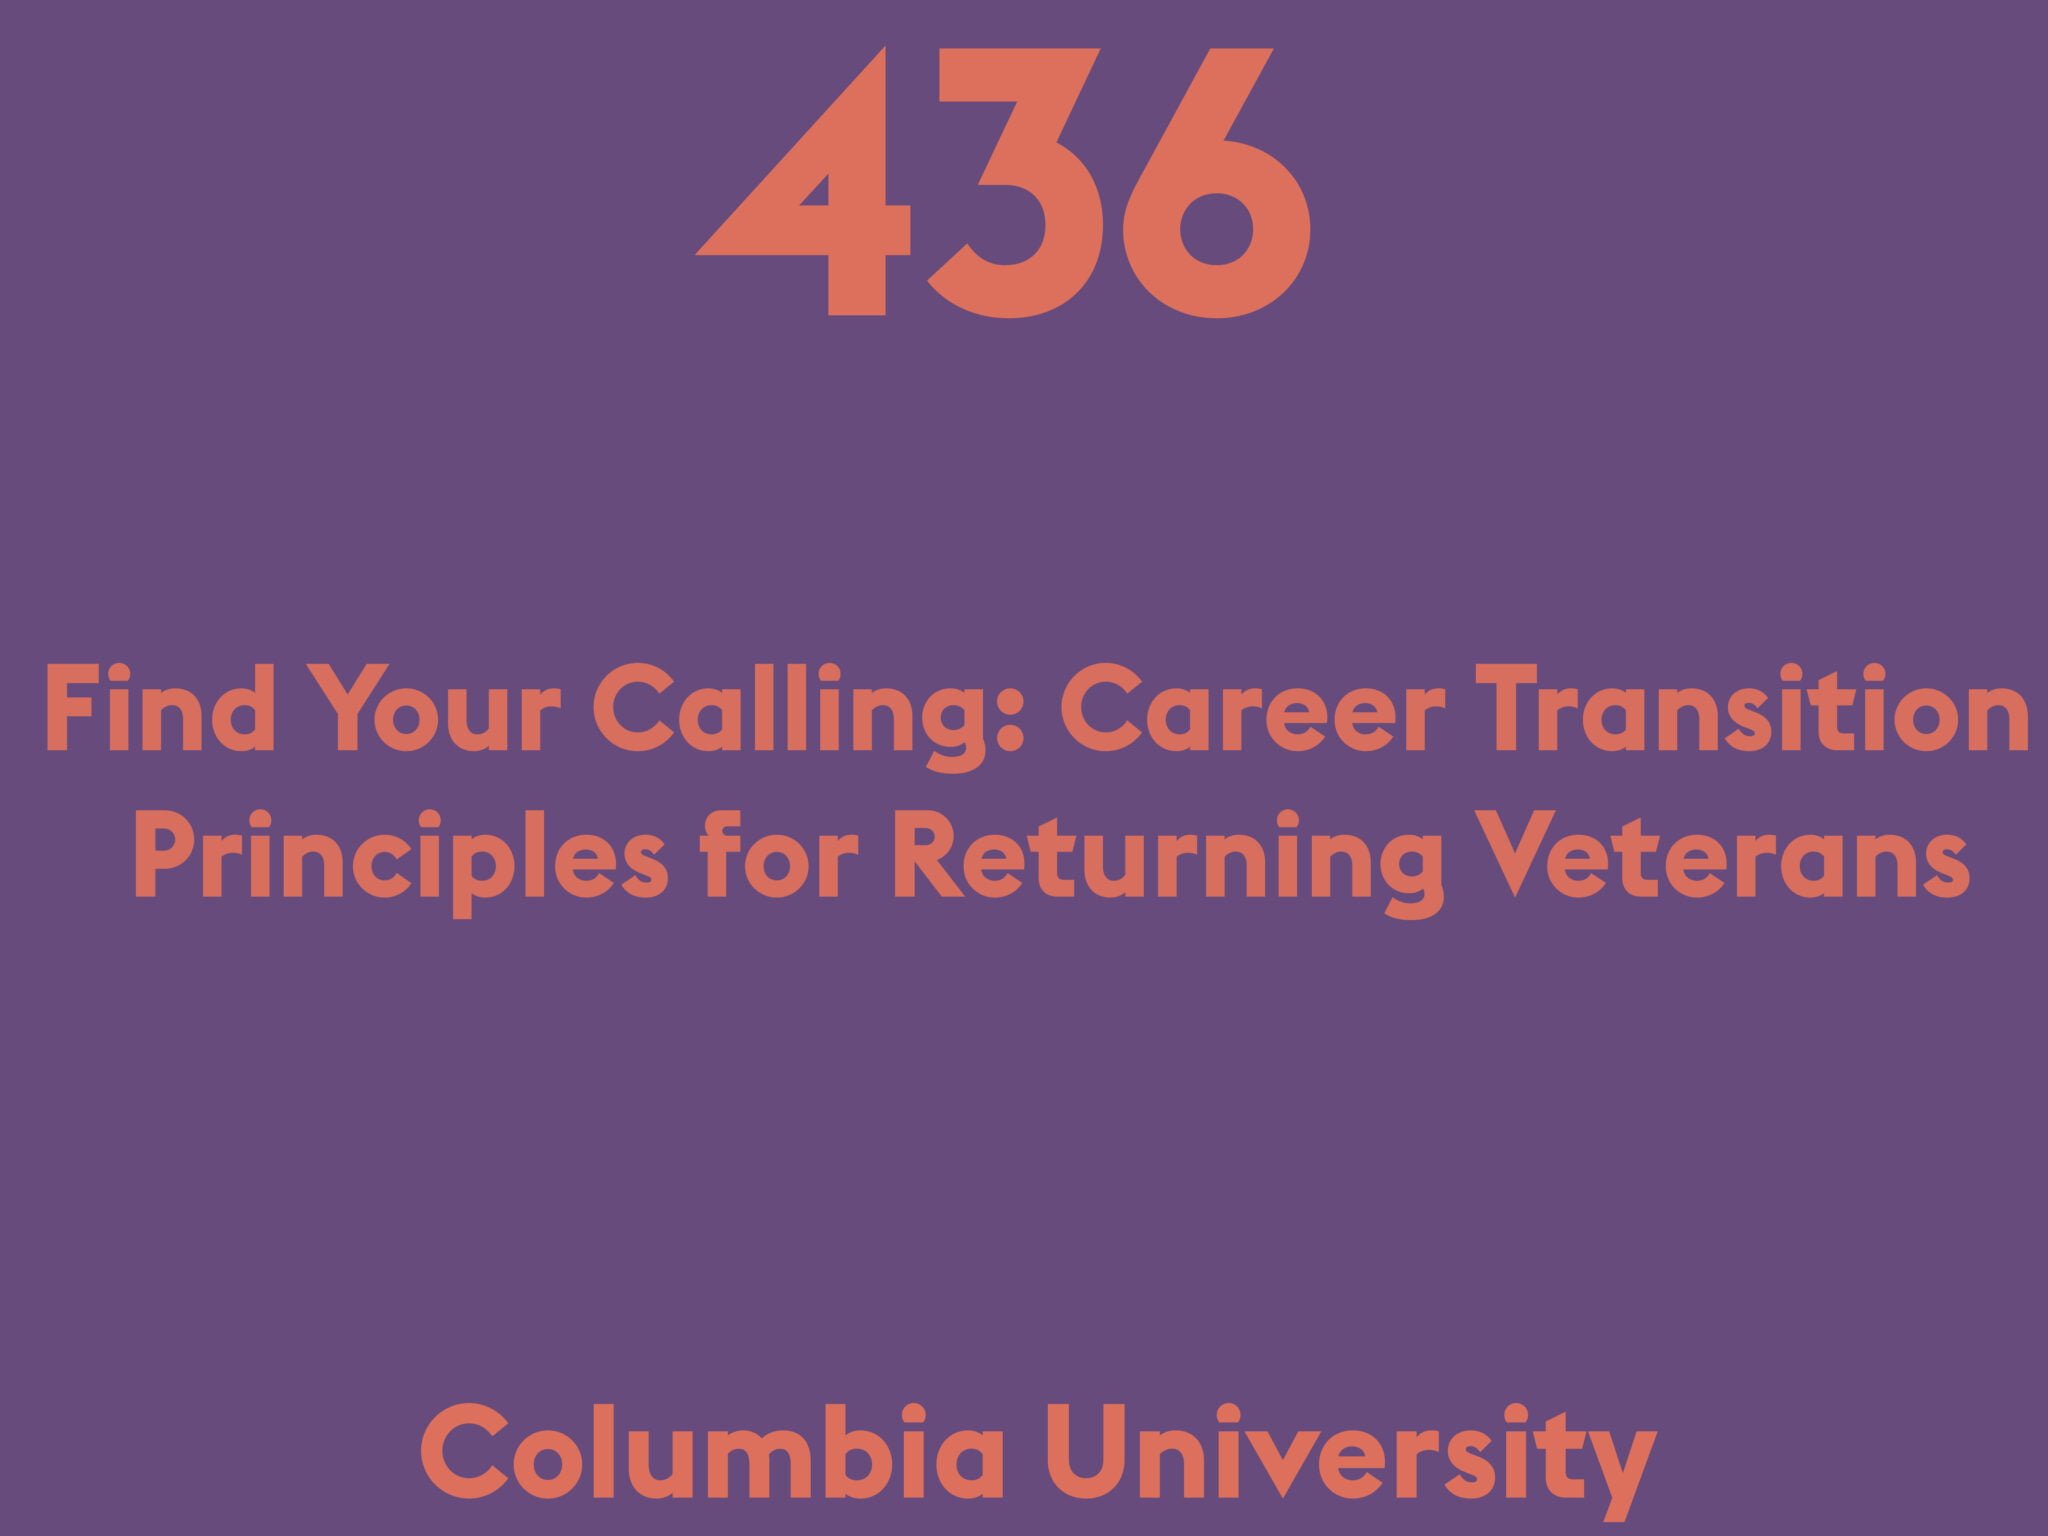 Find Your Calling: Career Transition Principles for Returning Veterans